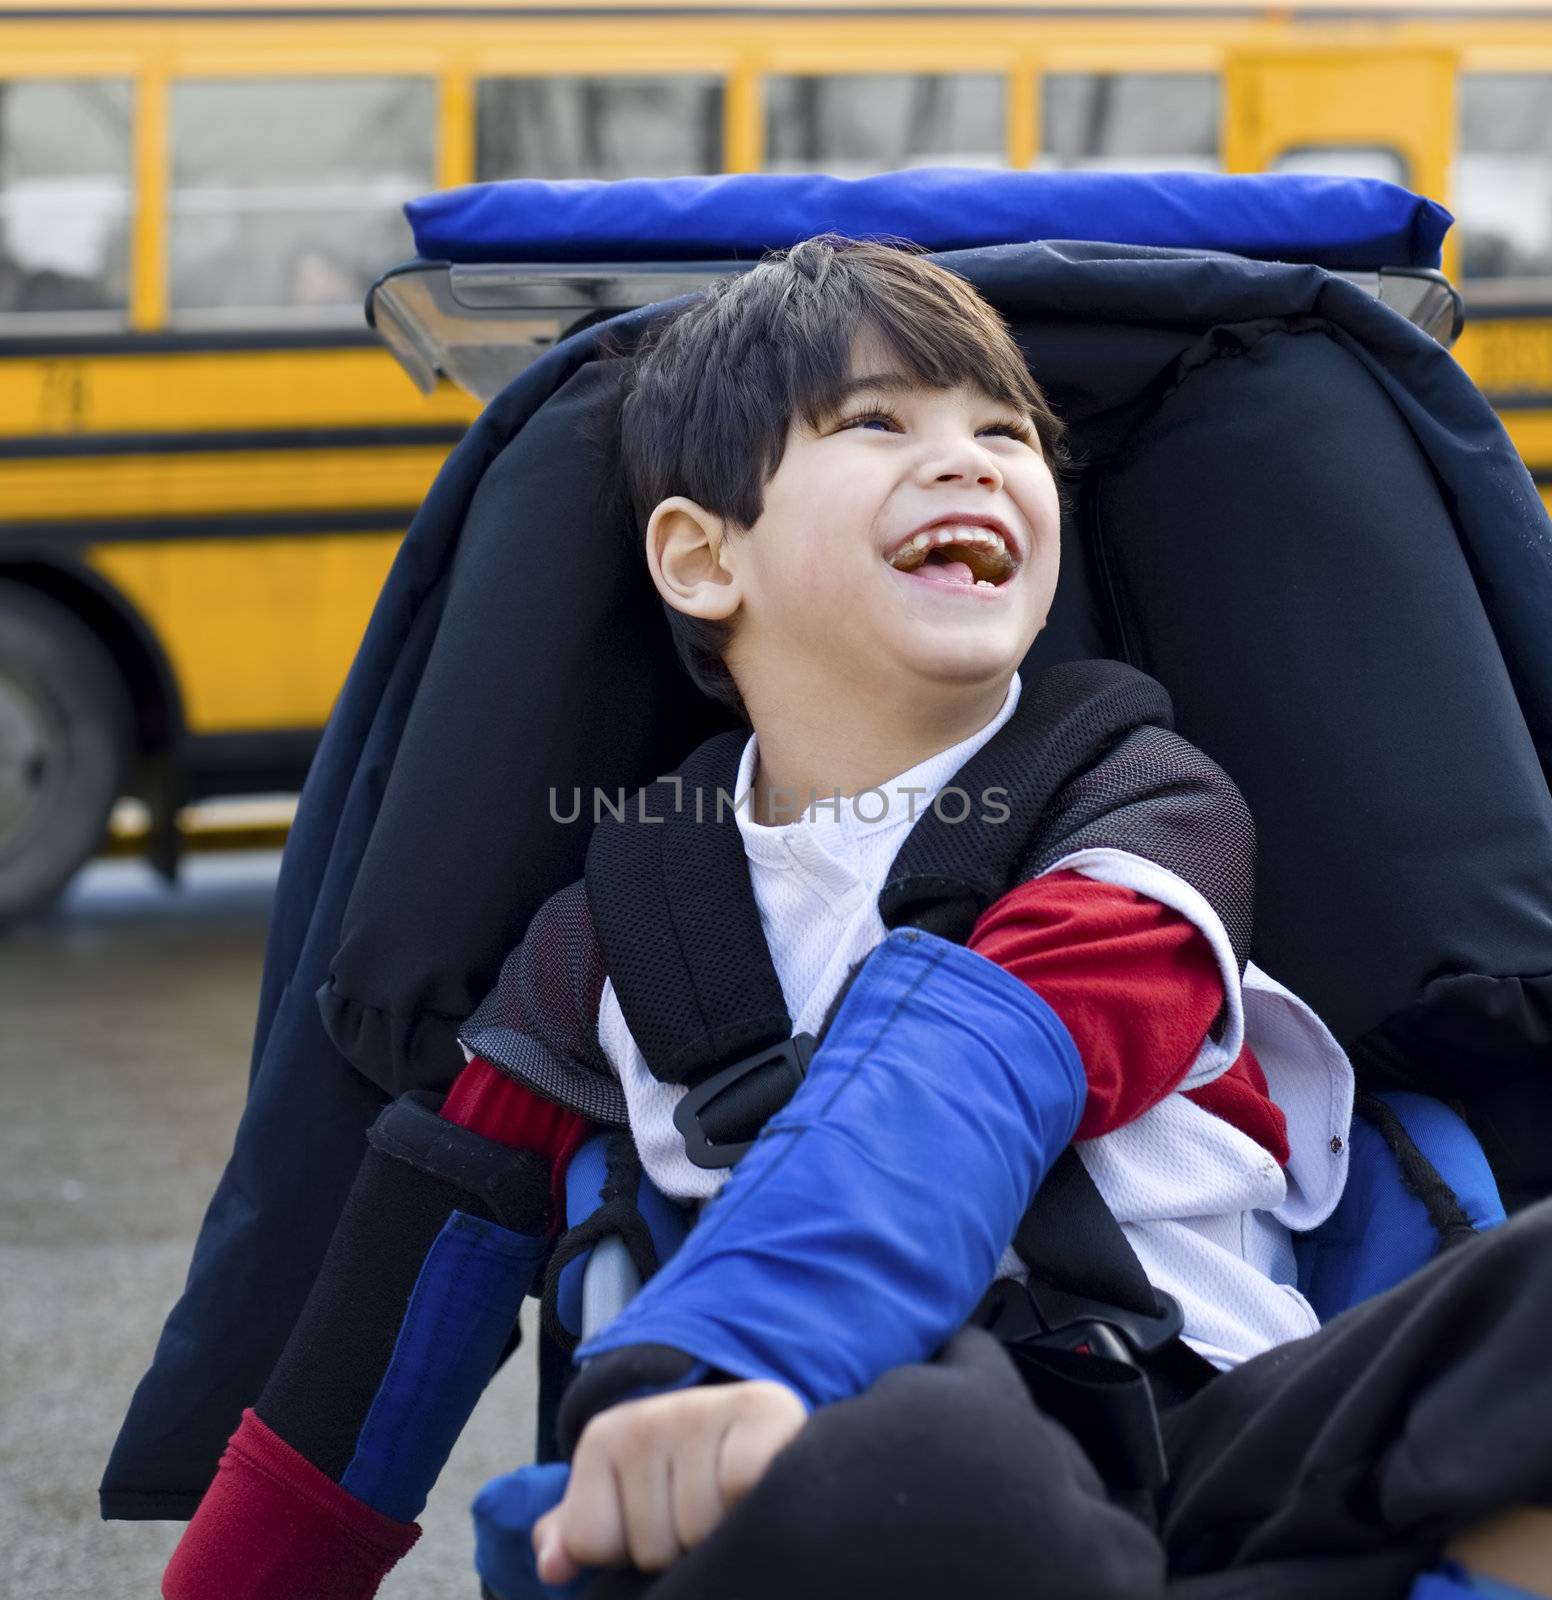 Disabled five year old boy in wheelchair, by schoolbus by jarenwicklund